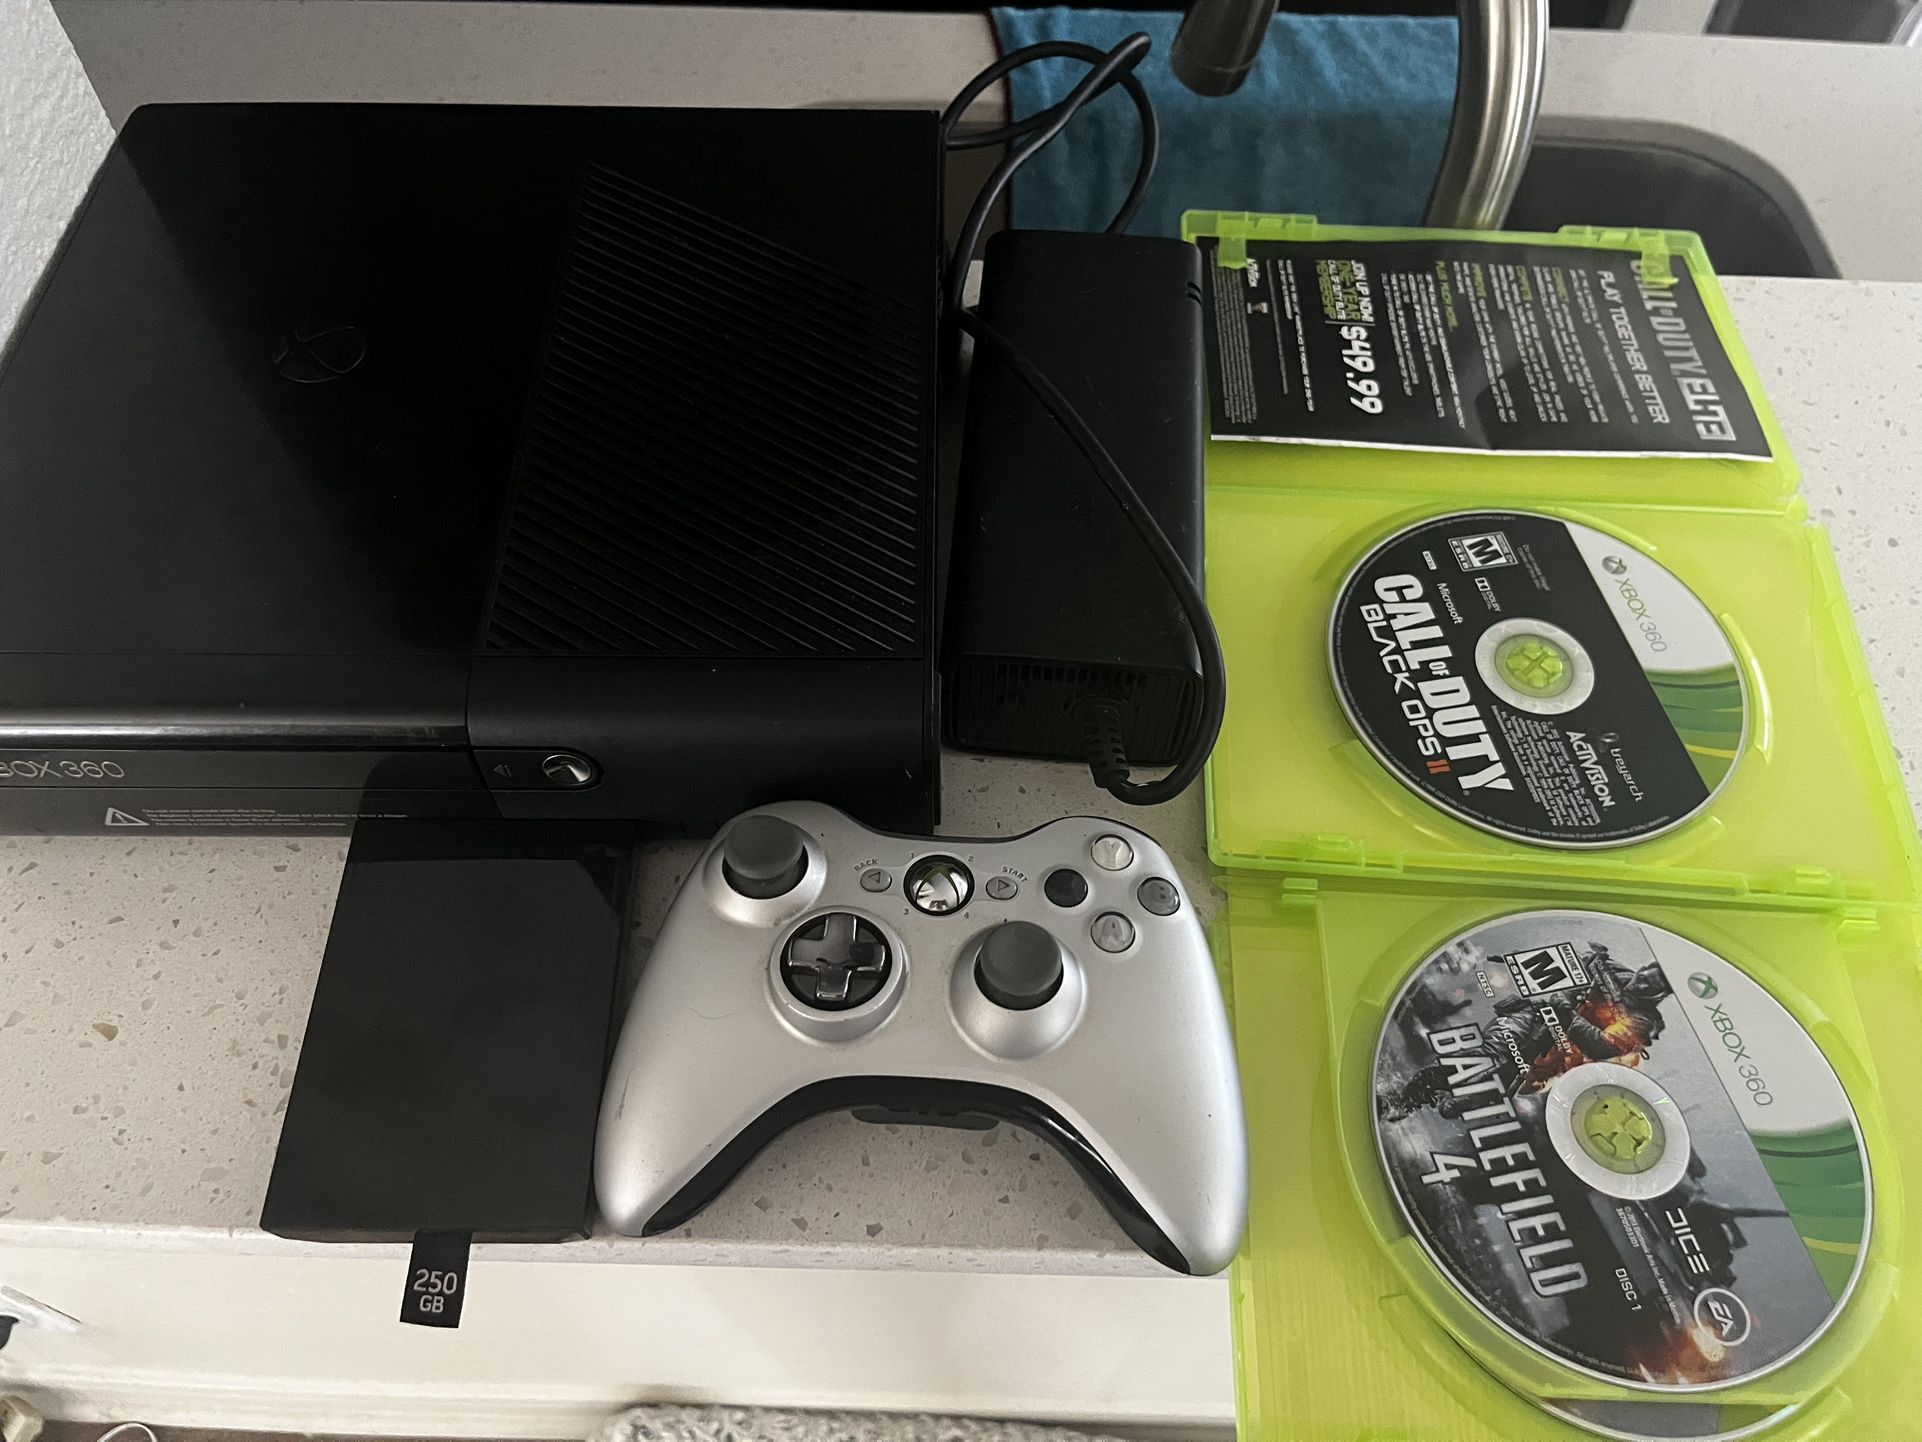 Xbox 360 E 250 GB With Games